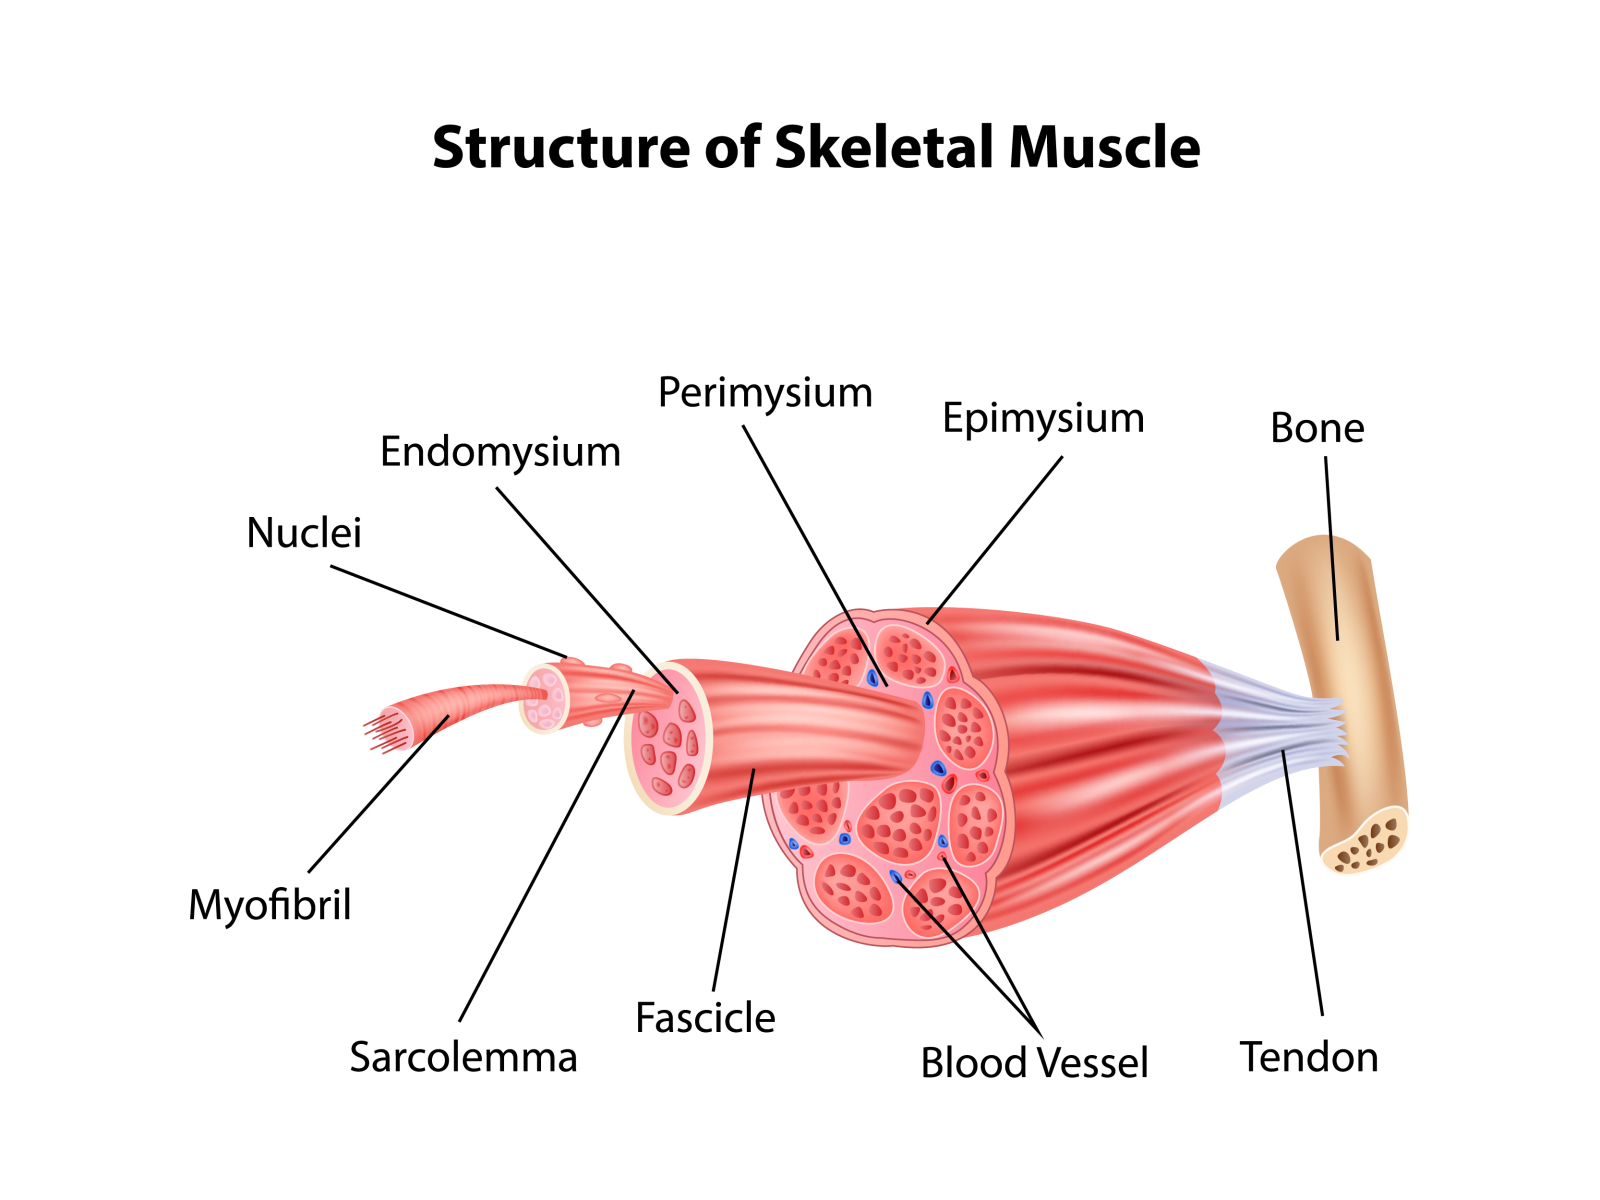 structure-skeletal-muscle-anatomy-by-tigatelu-on-dribbble